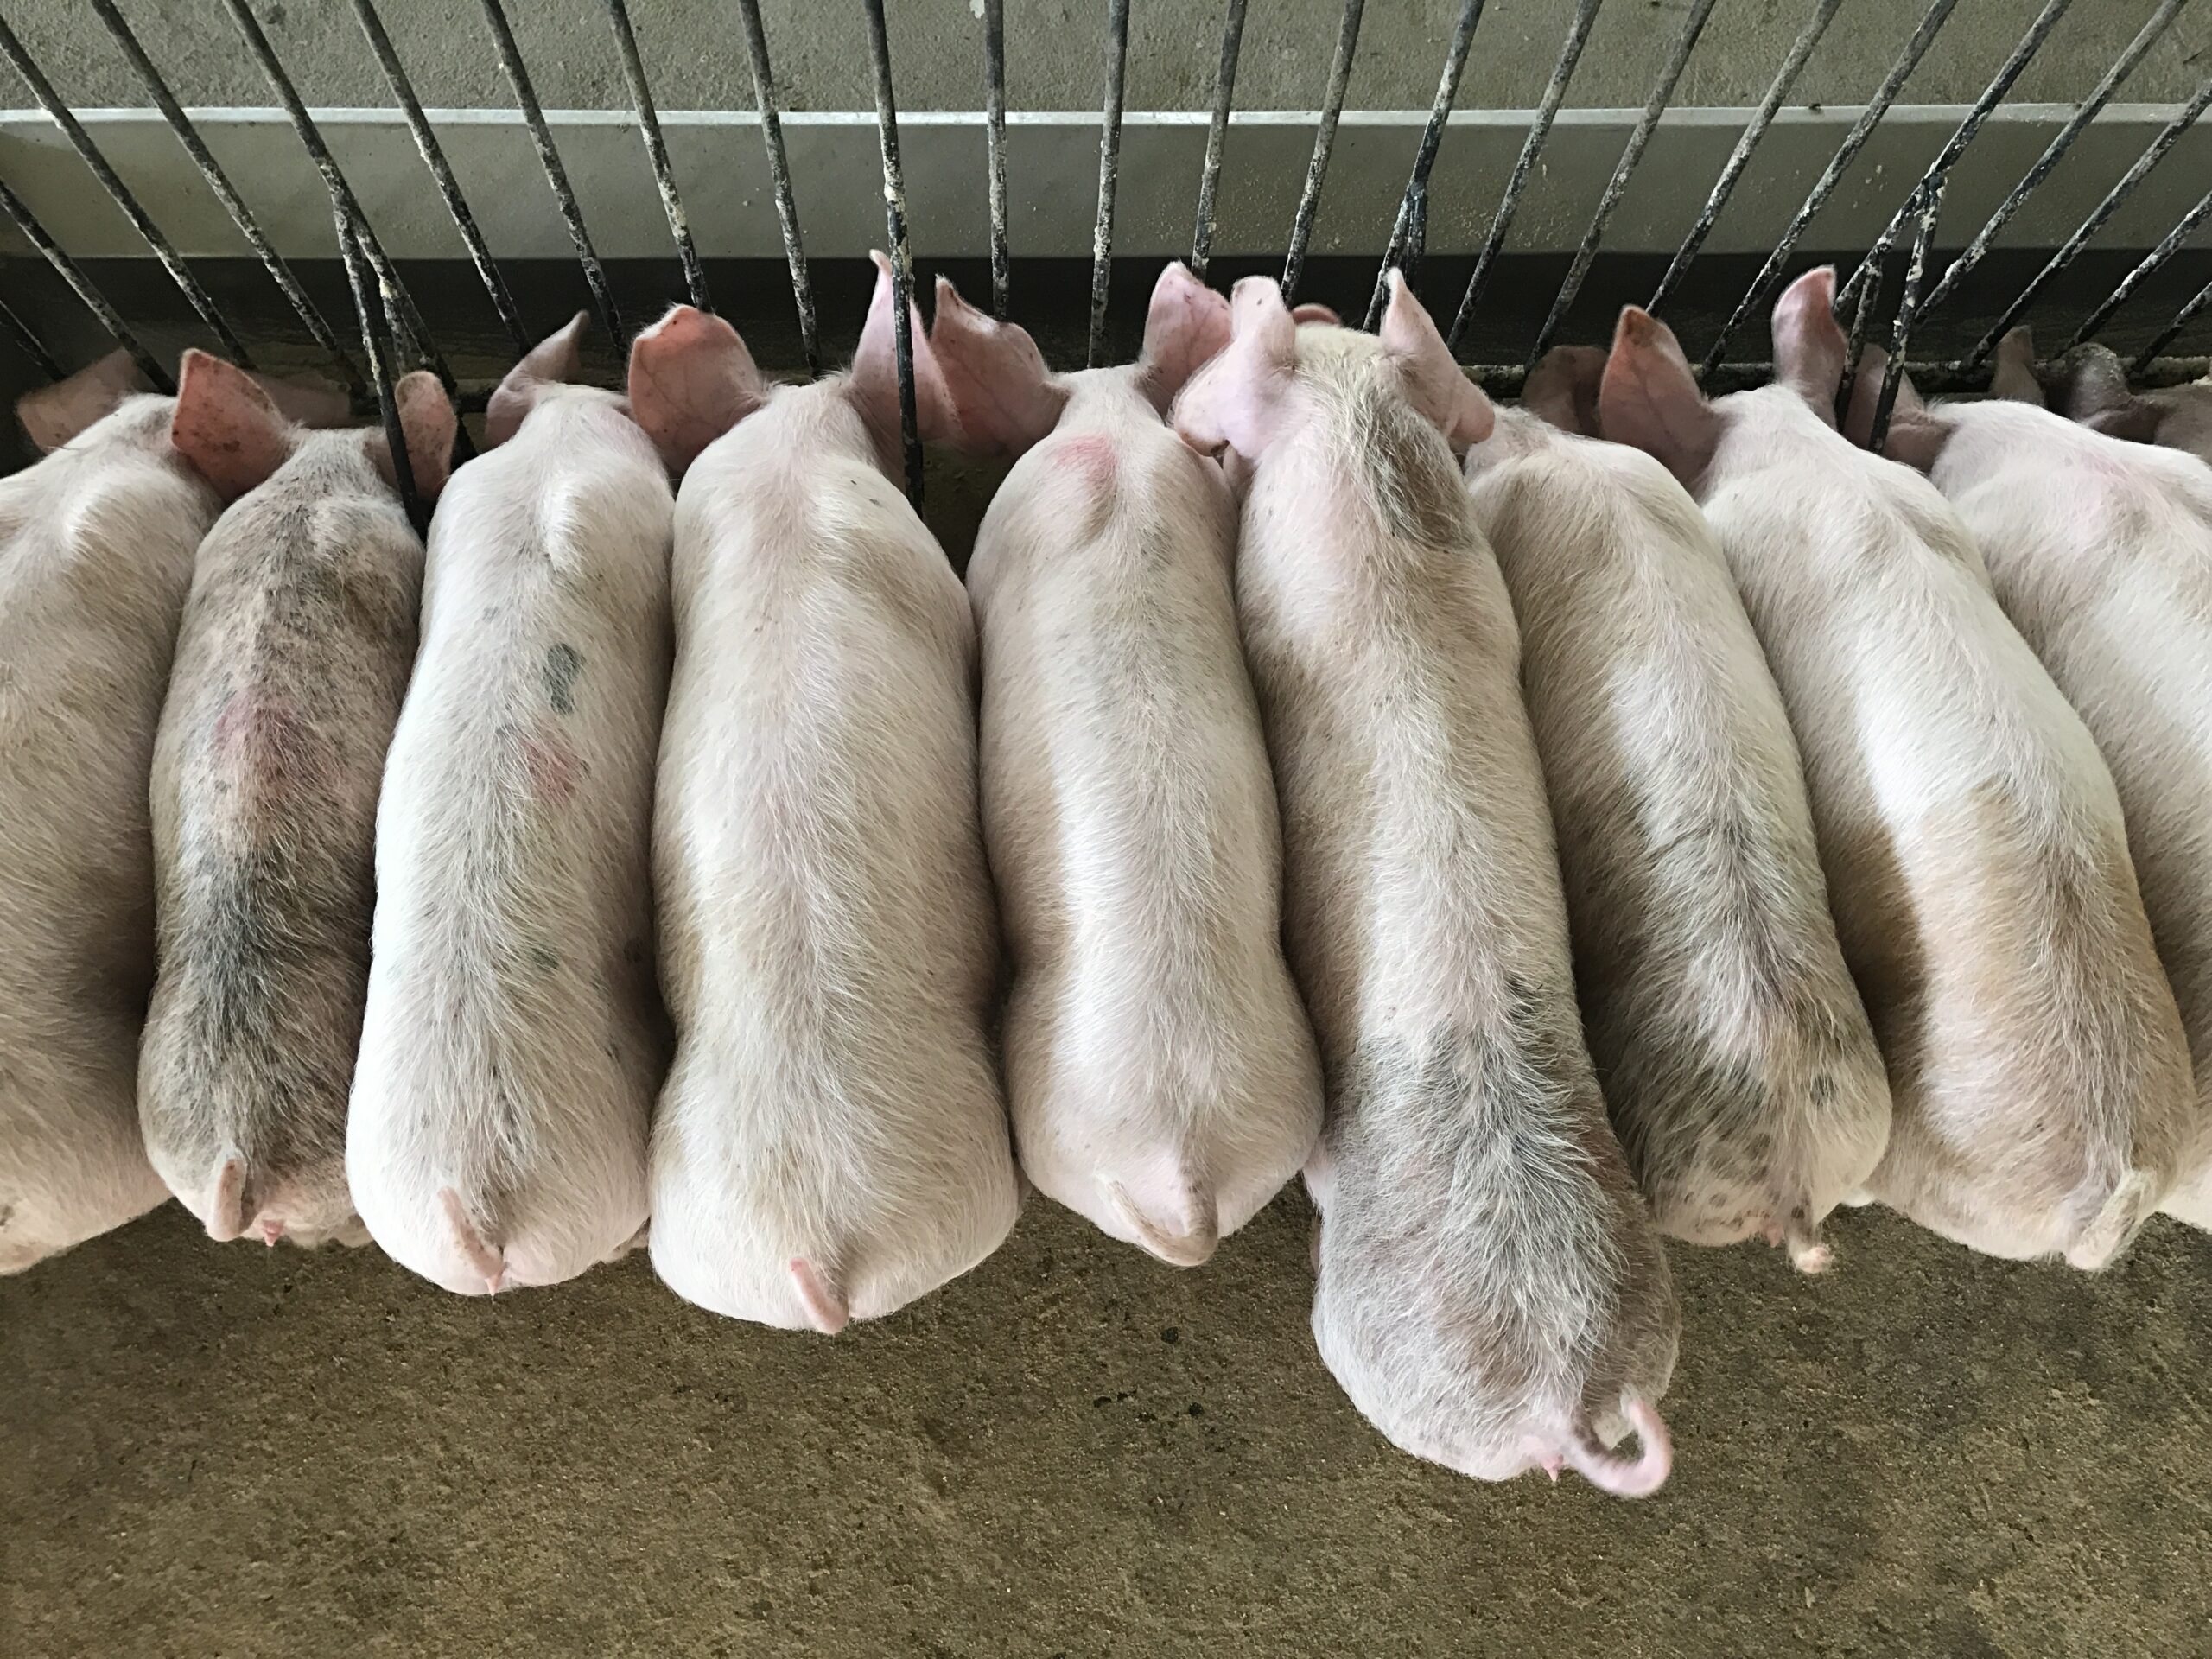 Food waste in pig feeding